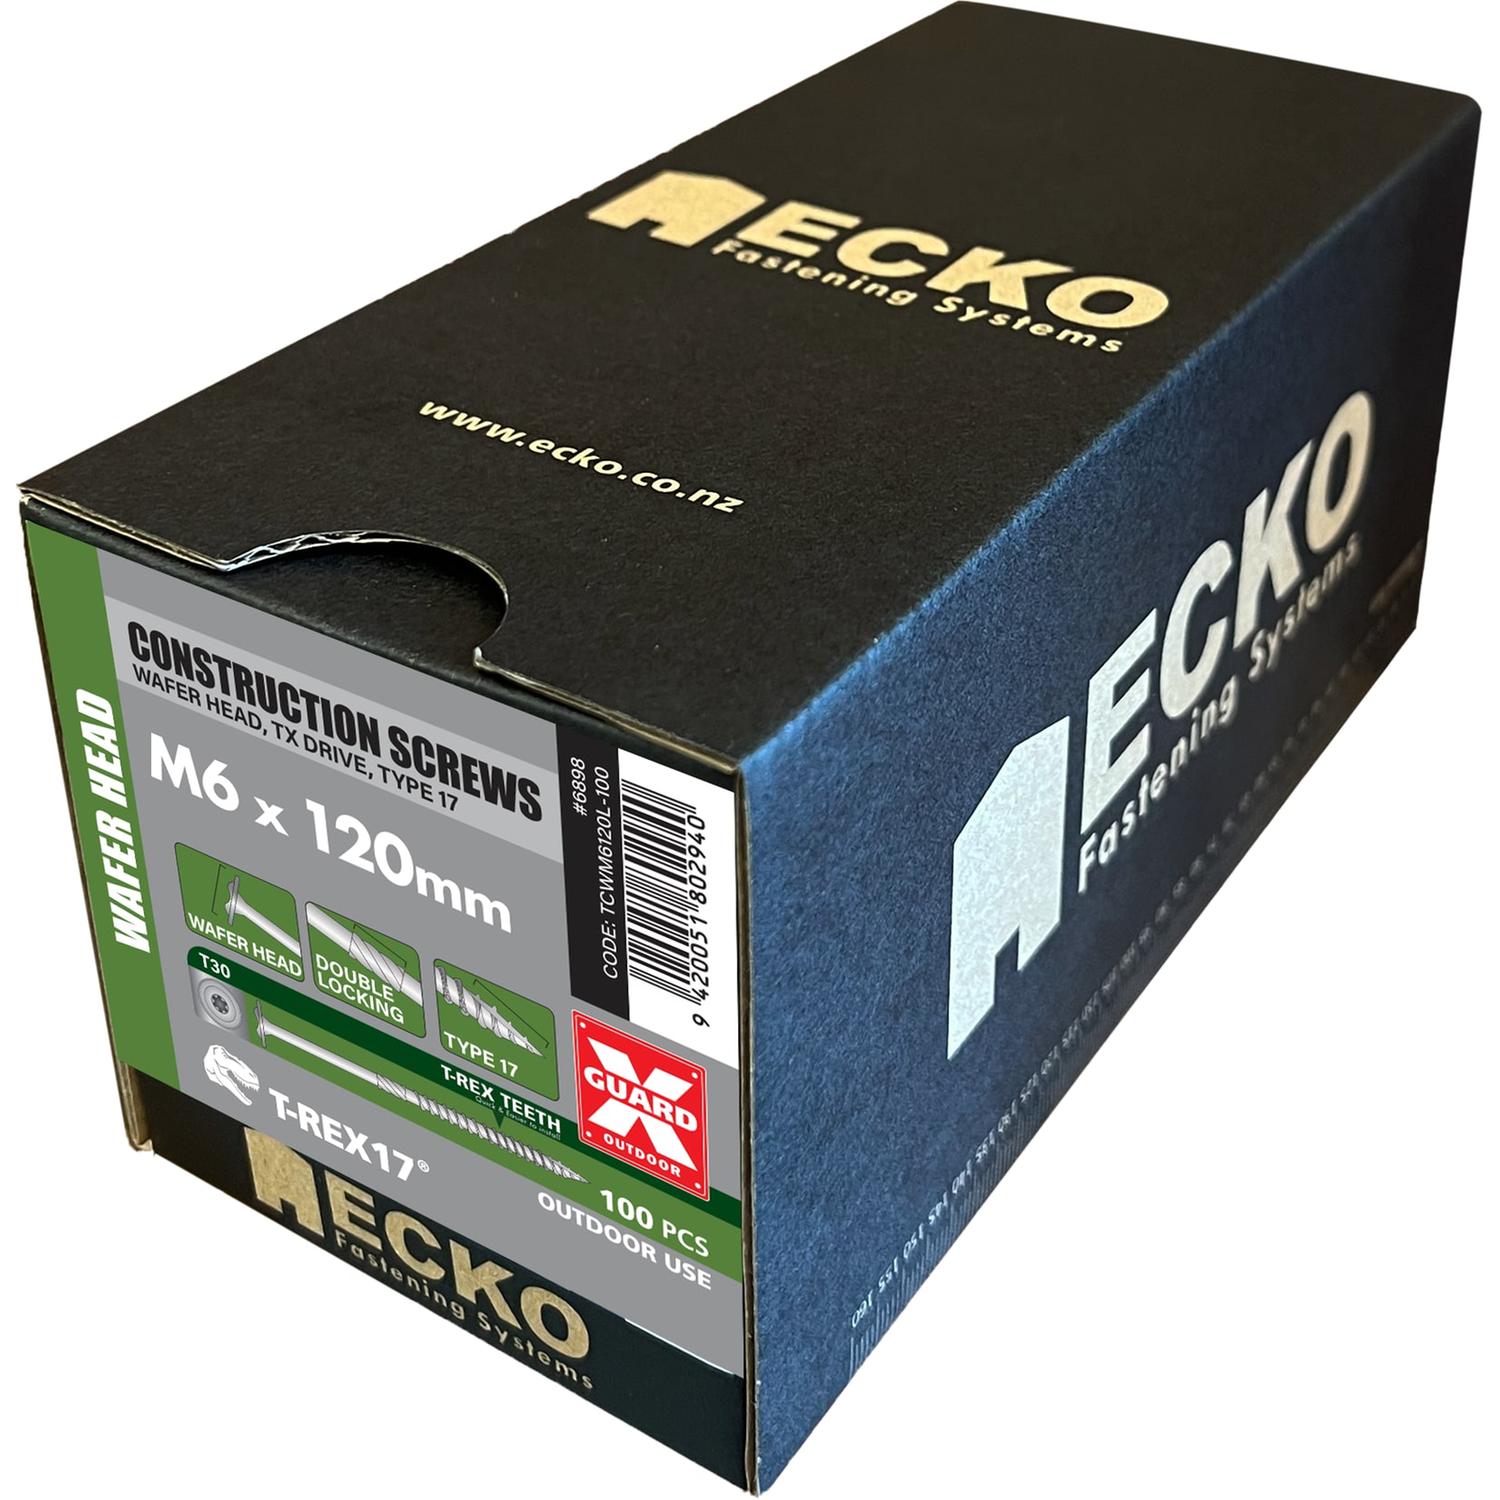 Ecko T-Rex17 Wafer Head Construction Screws M6 X 100Mm (500 Pack)